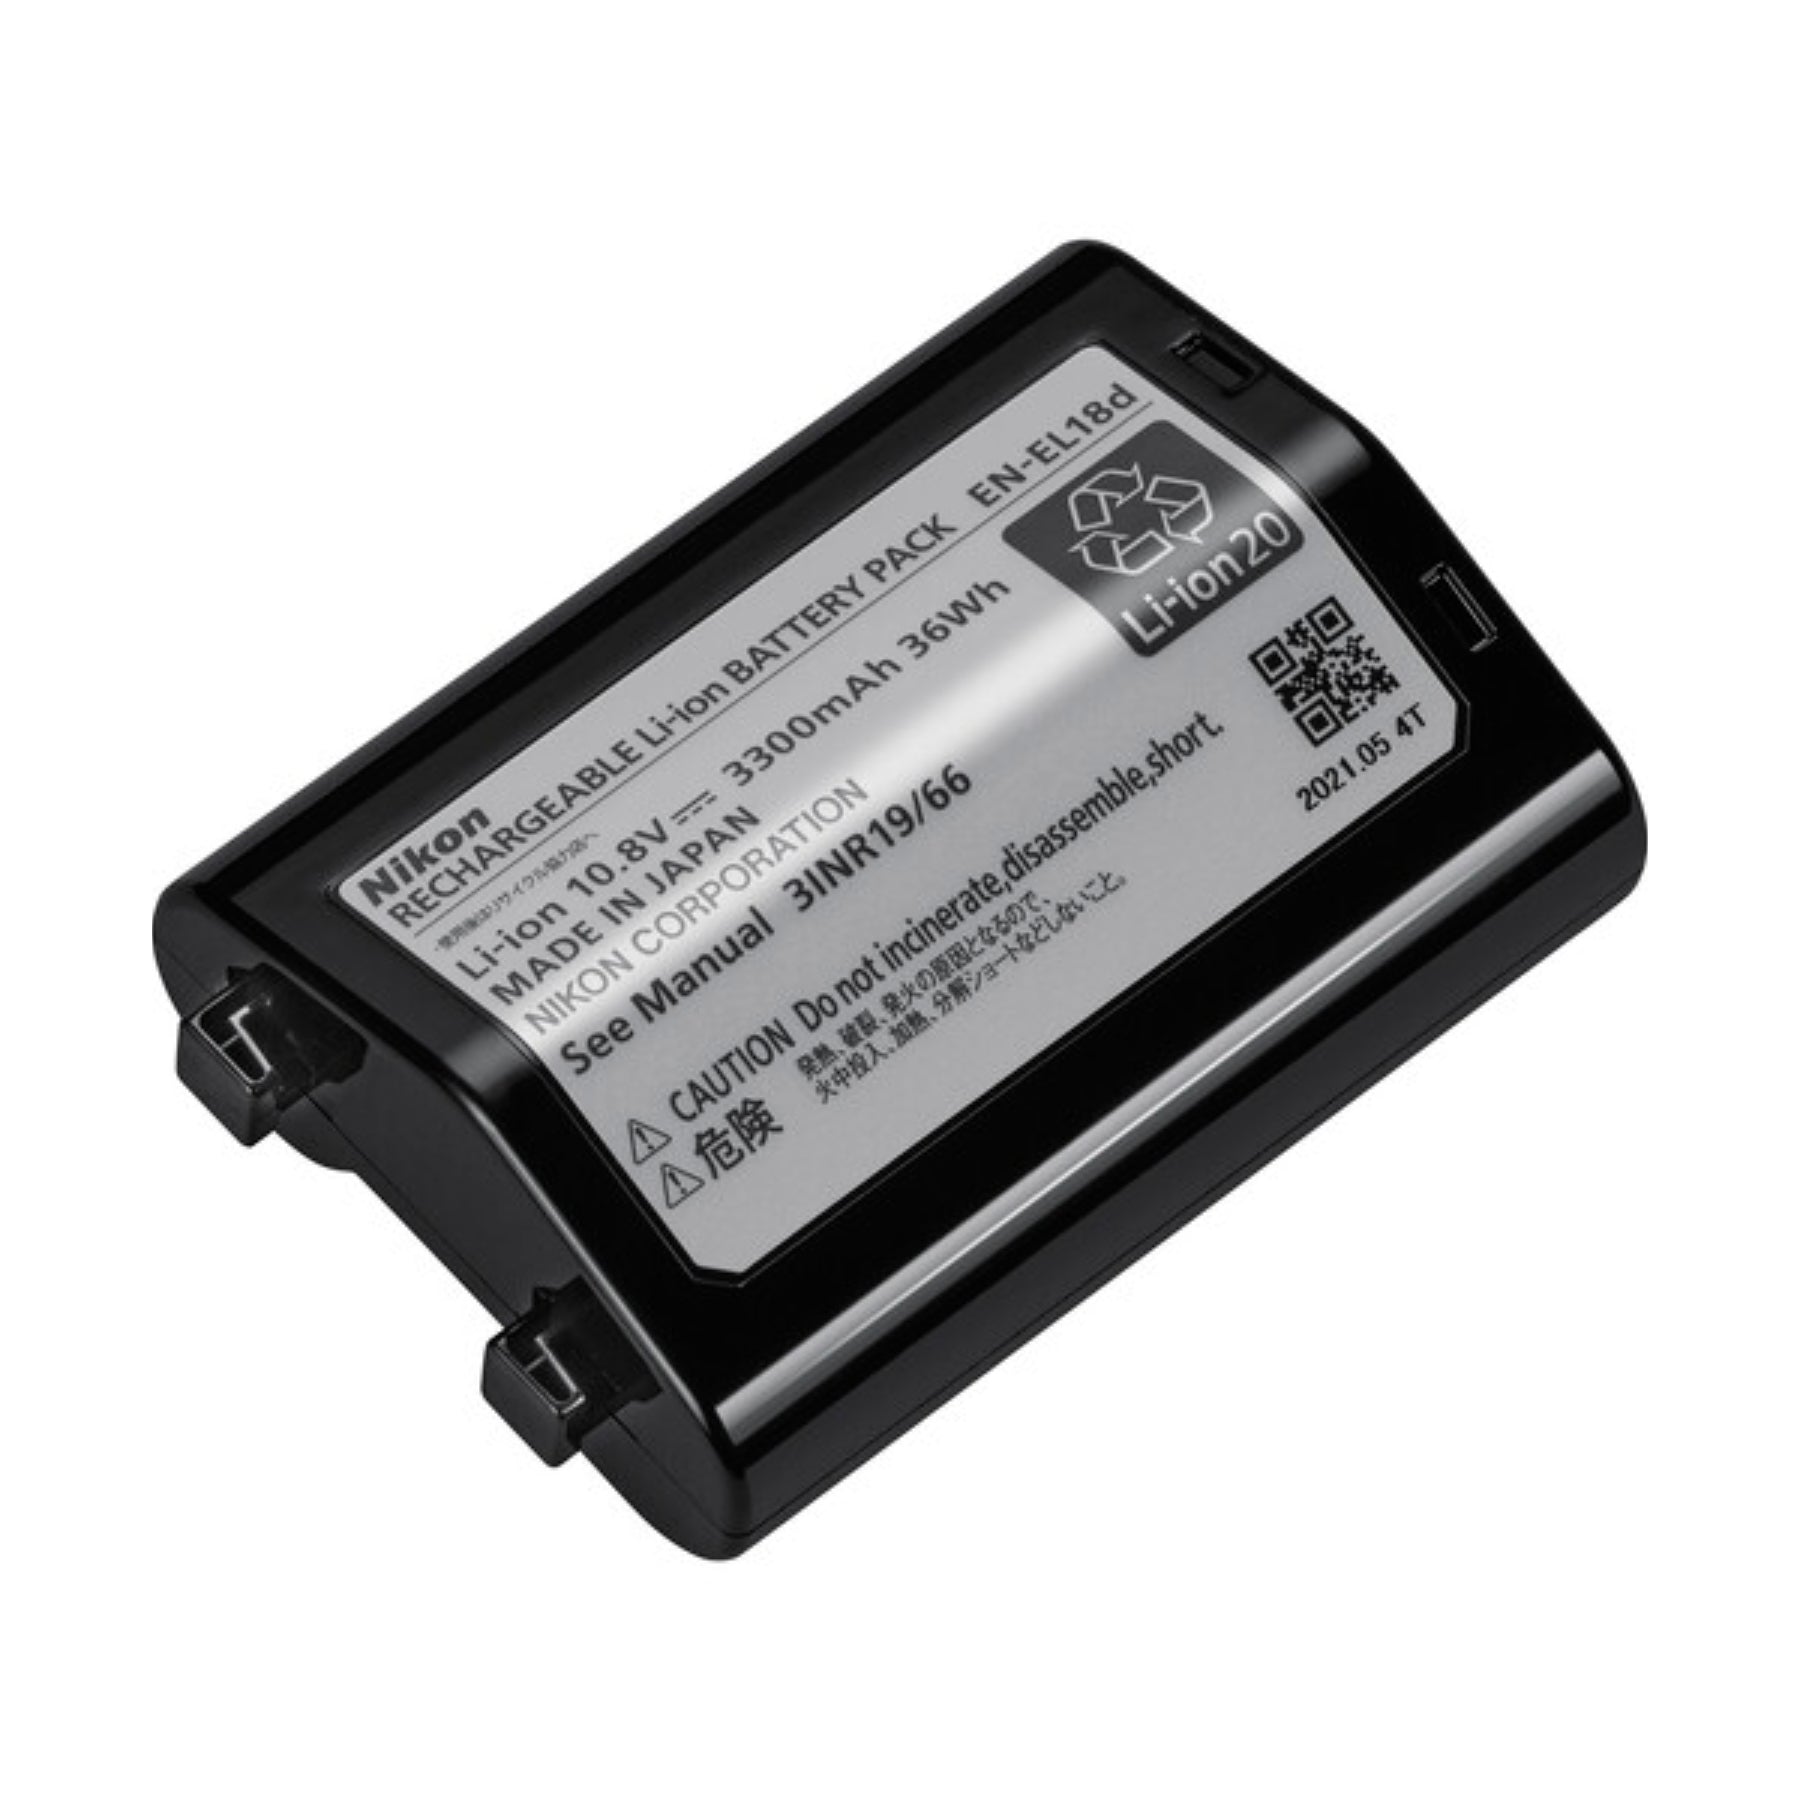 Buy Nikon EN-EL18d Rechargeable Lithium-Ion Battery at Topic Store